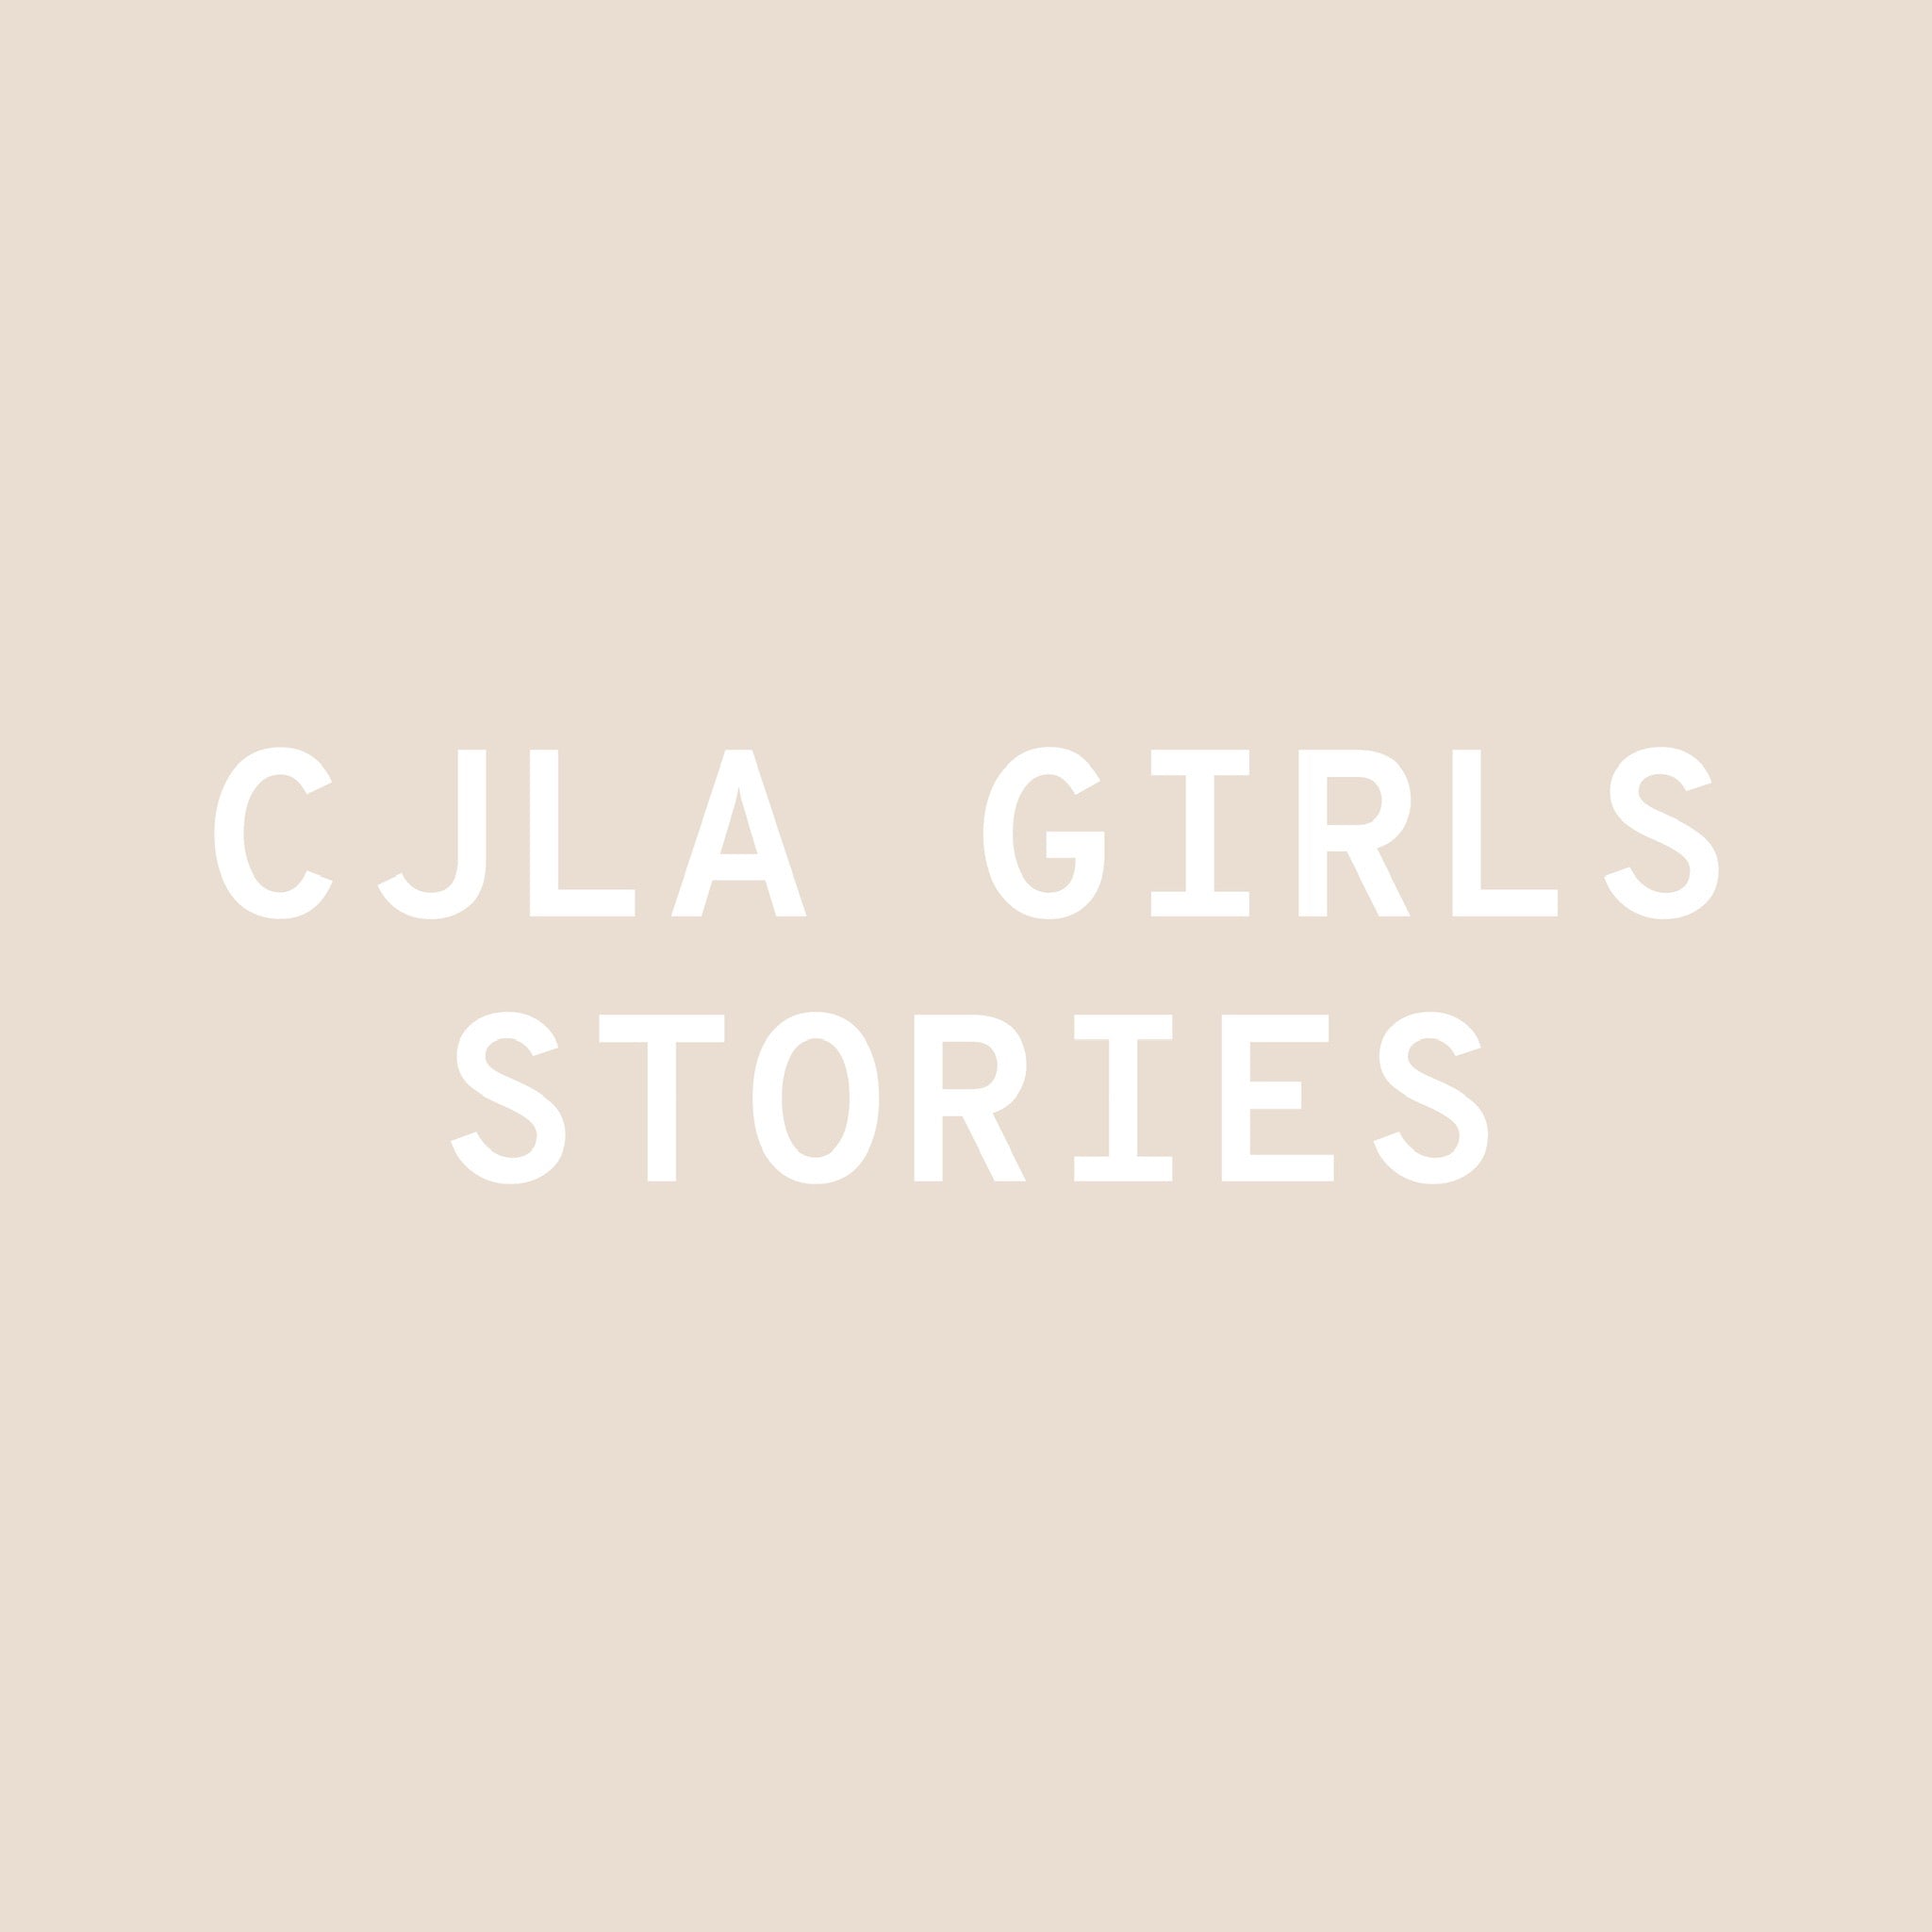 CJLA Girls Stories: Melissa & Emma Norton